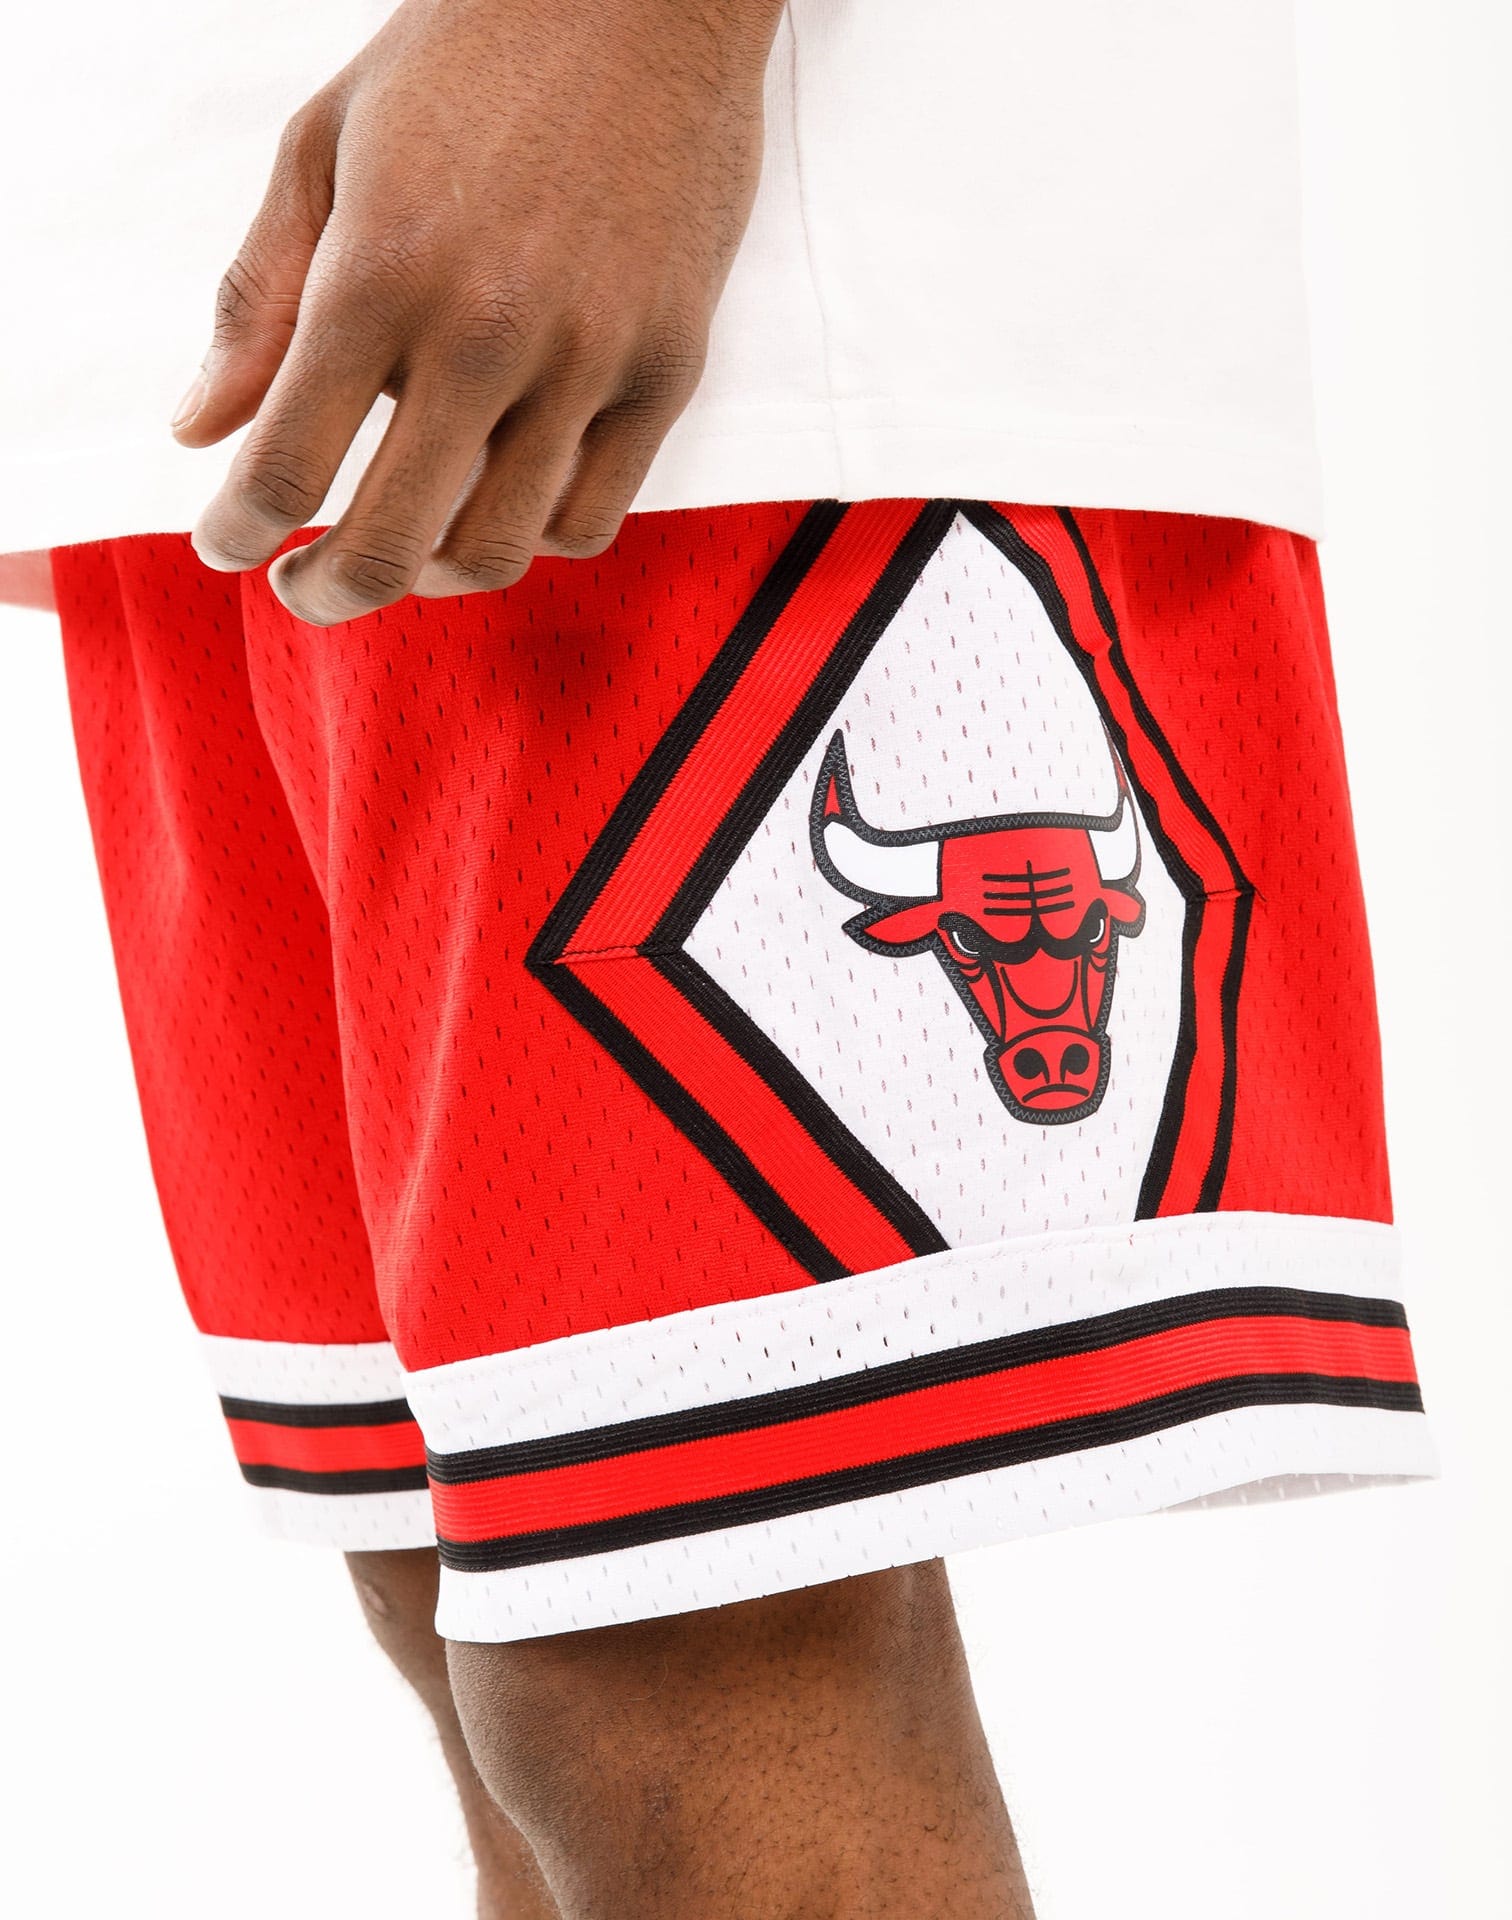 MITCHELL & NESS Chicago Bulls Swingman Shorts Size Small